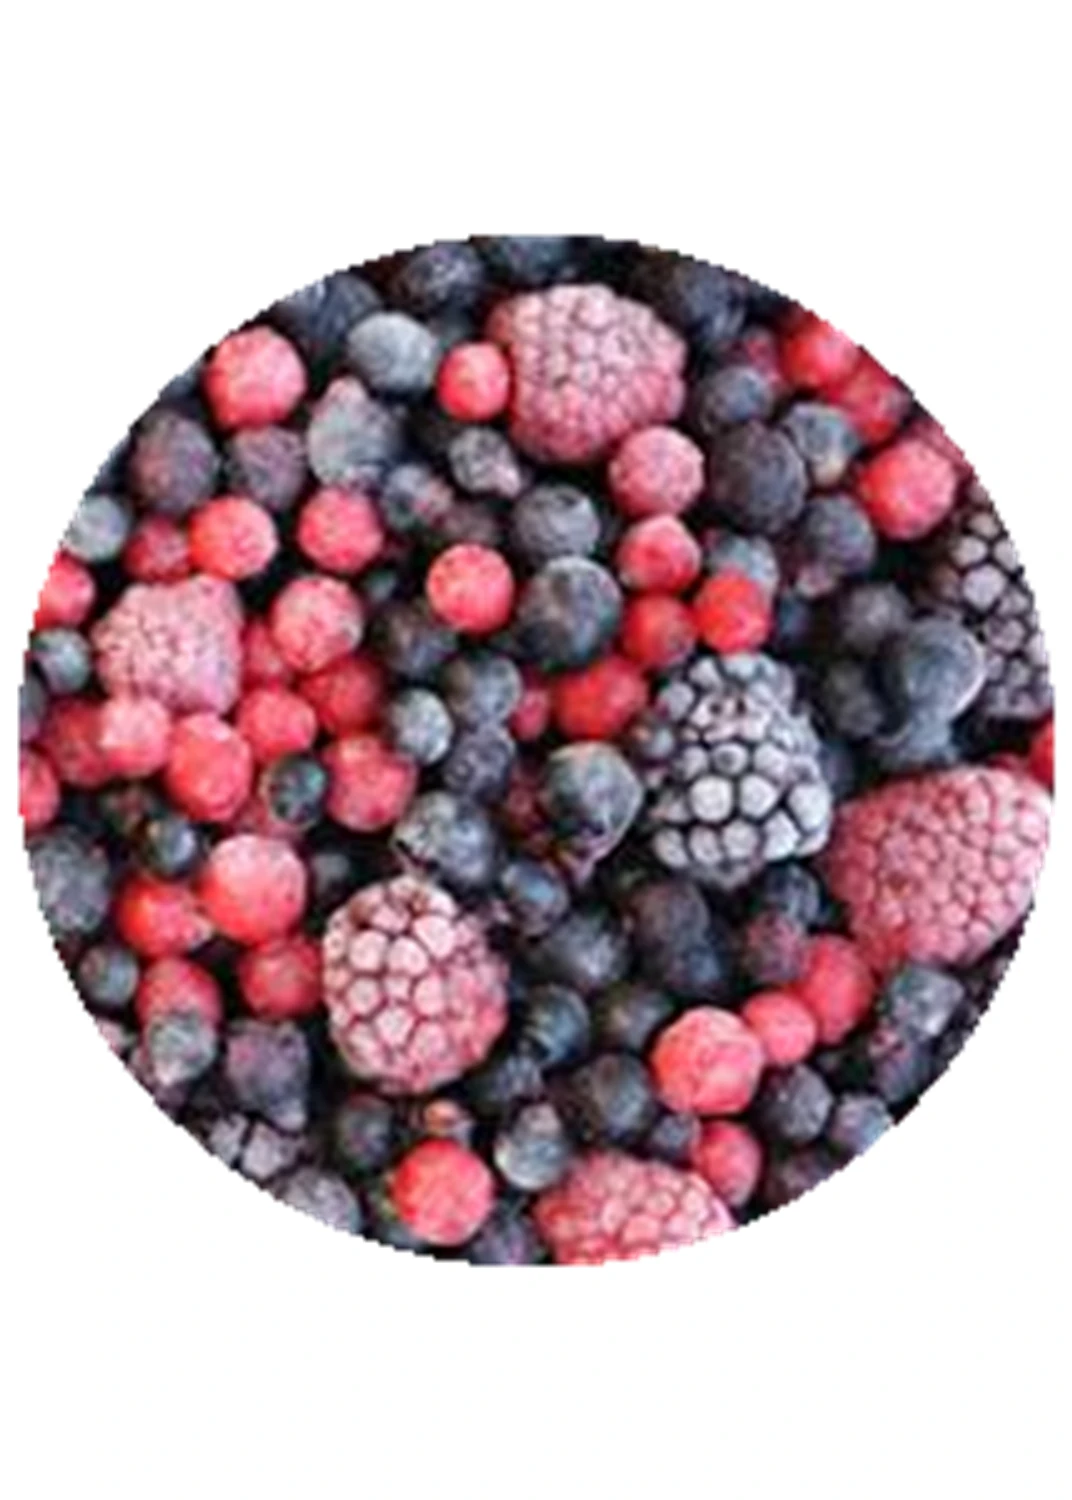 IQF Frozen Fruits Frozen mixed fruit mixed berries